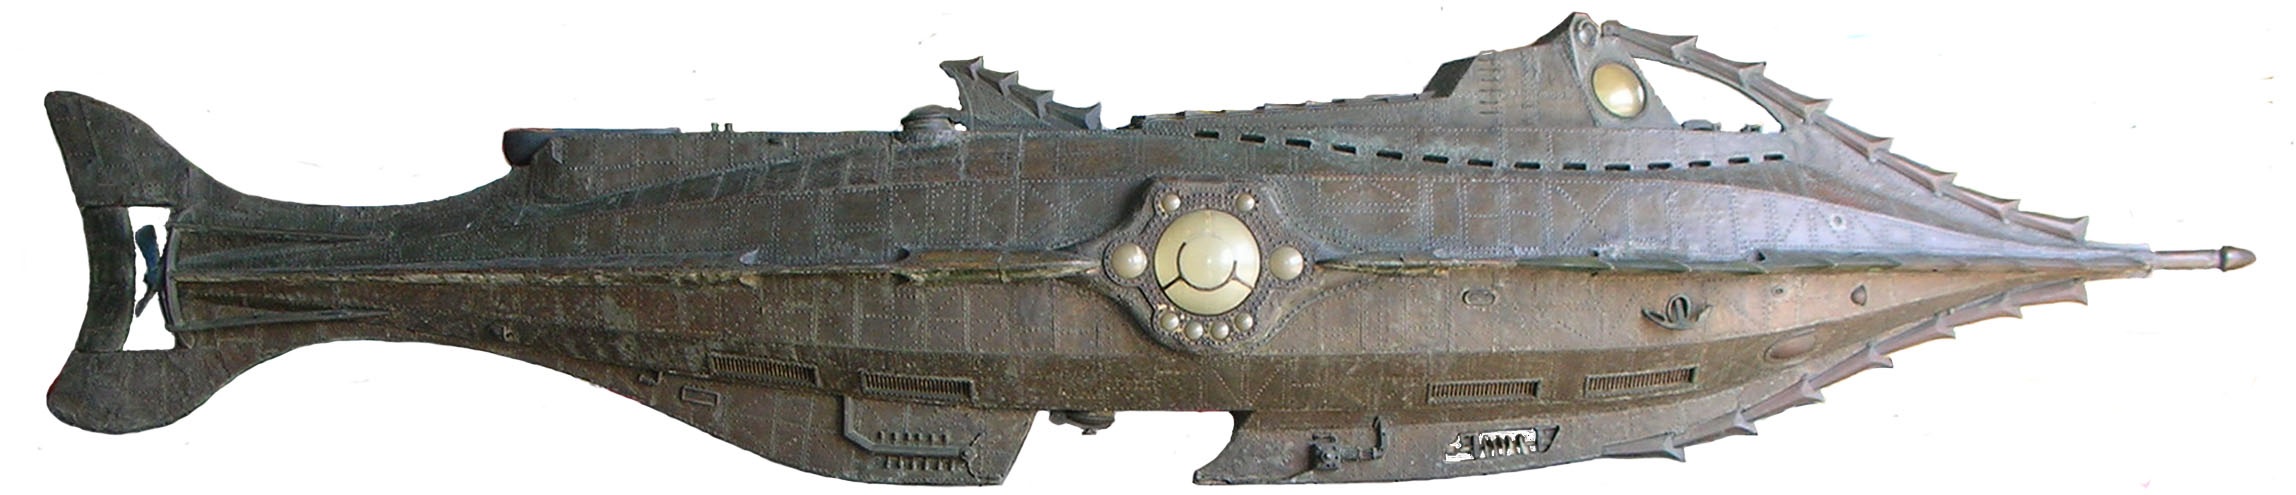 Related images to jules verne nautilus submarine model